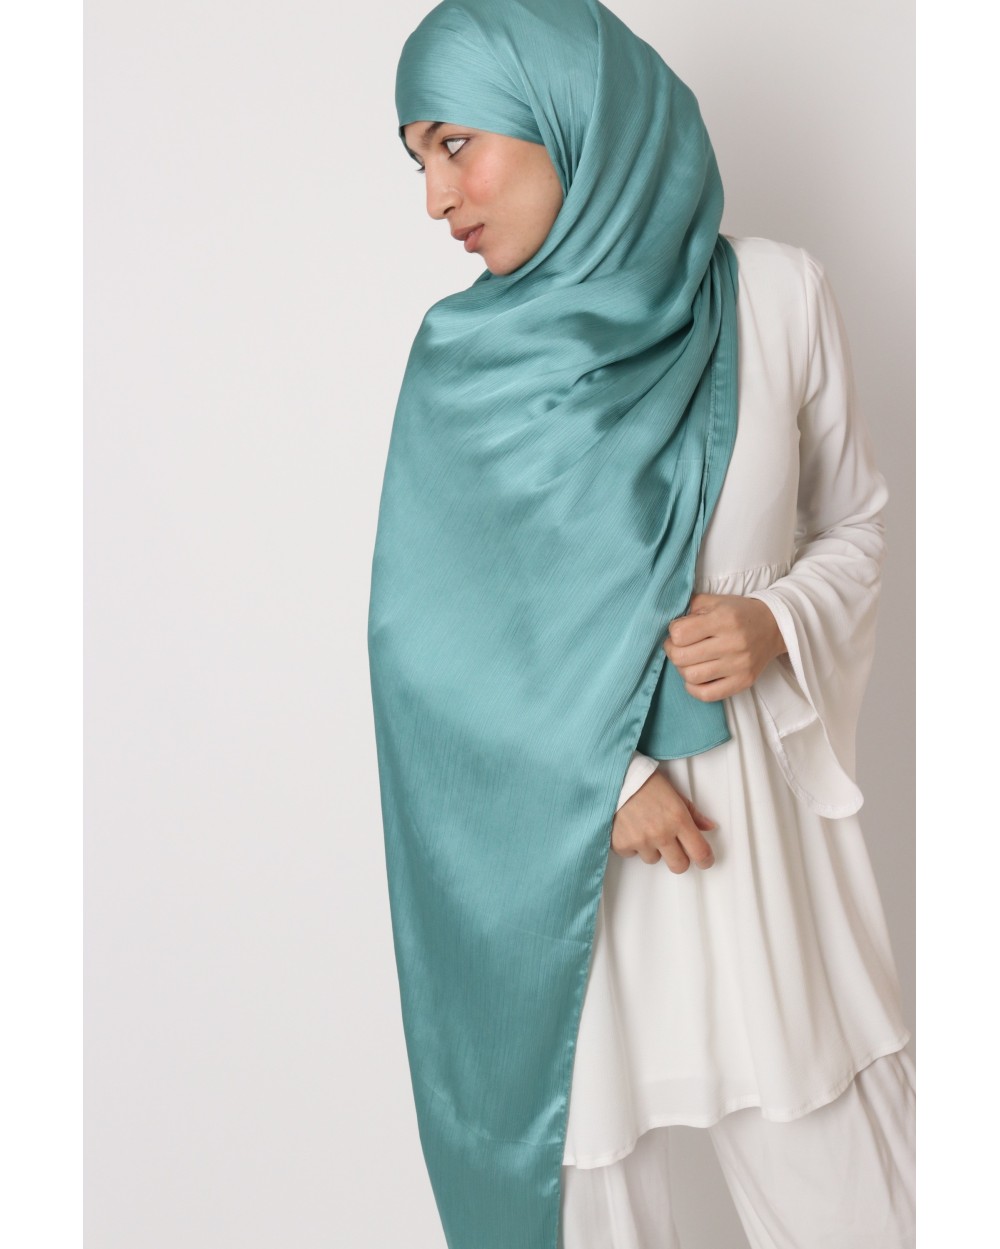 Pleated satin hijab to tie